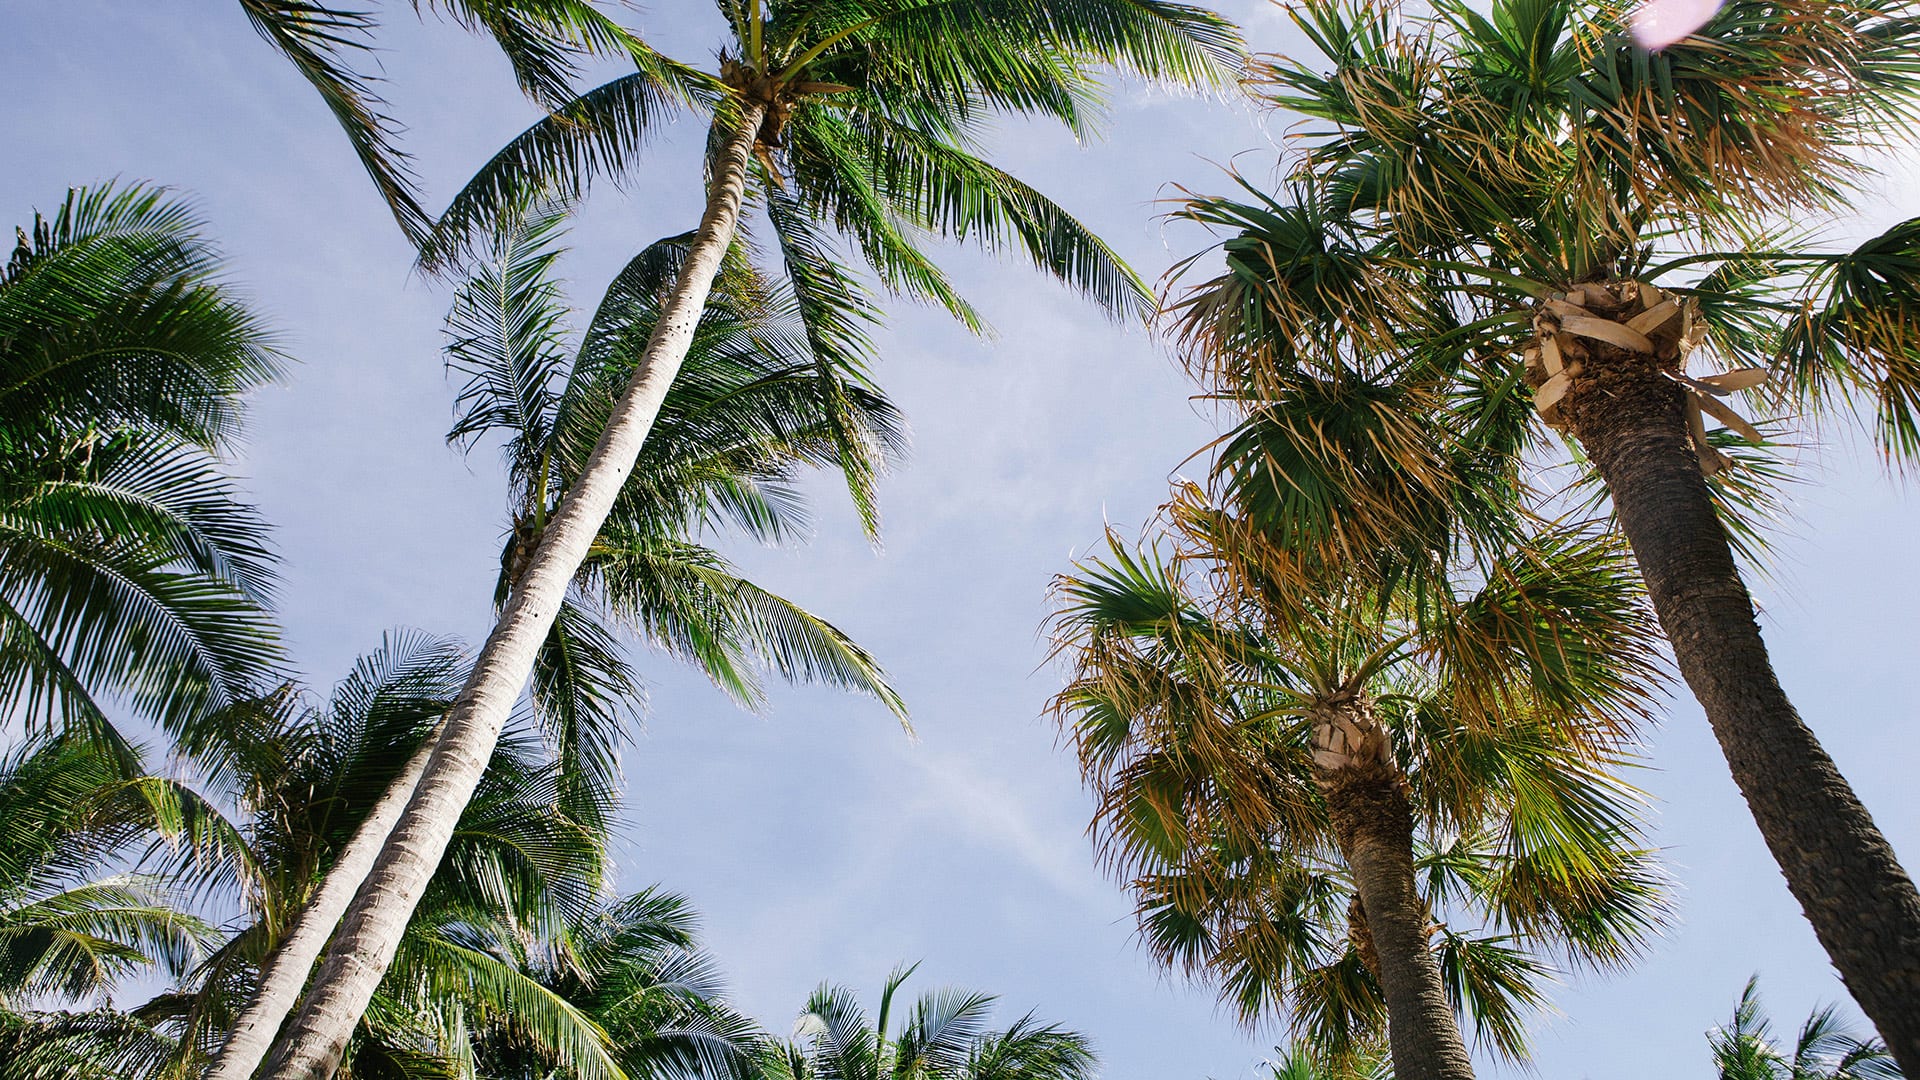 Uncreative Radio Palm trees against a blue sky